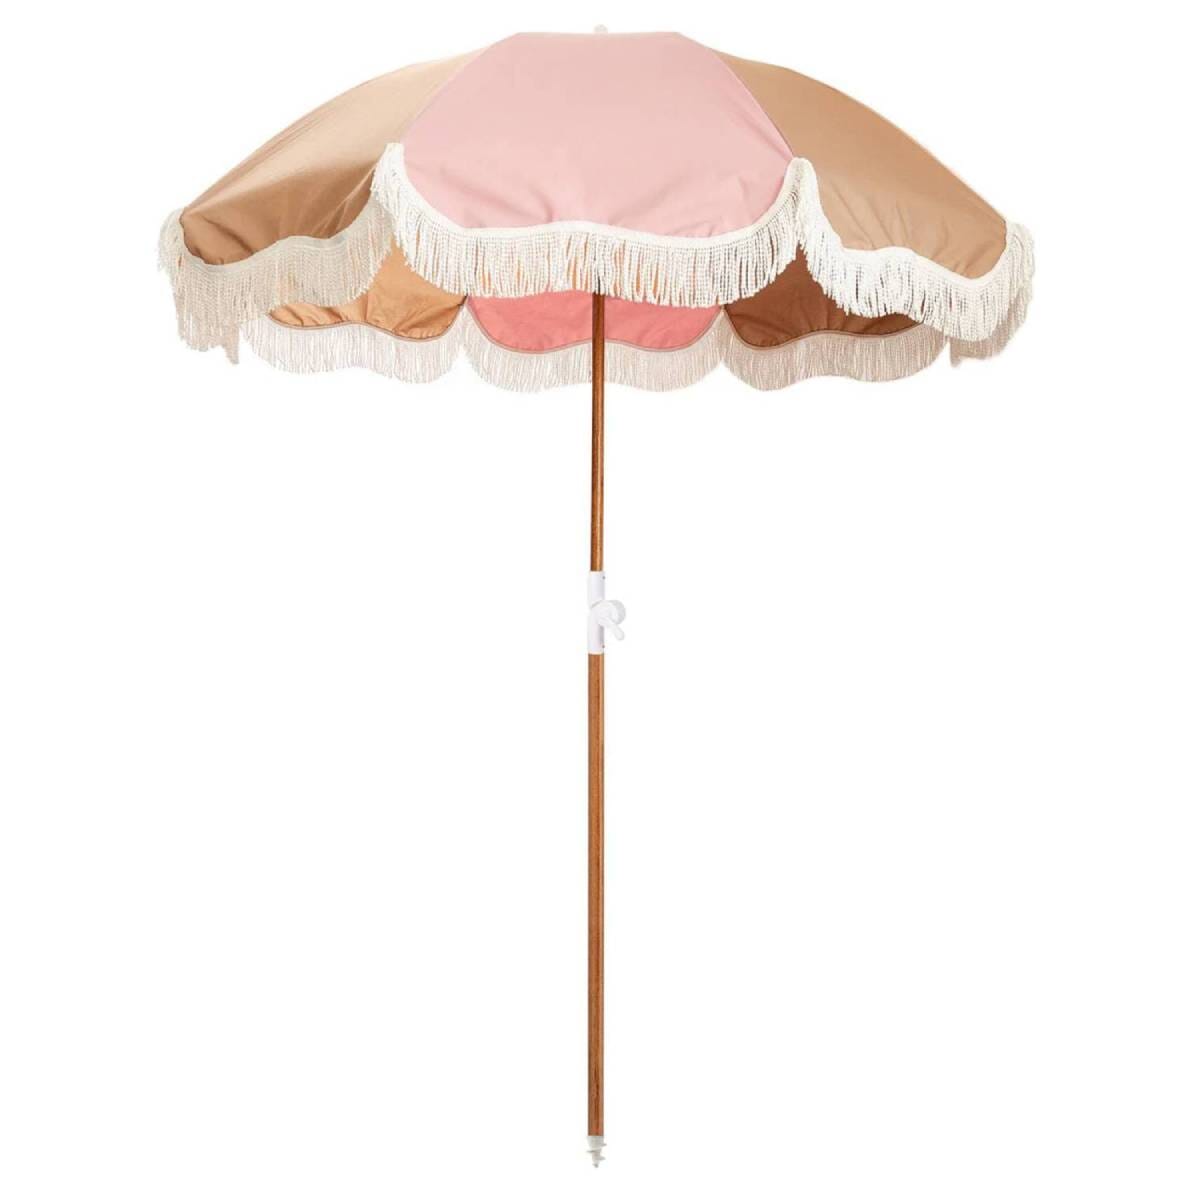 studio image of 70s sand holiday beach umbrellas